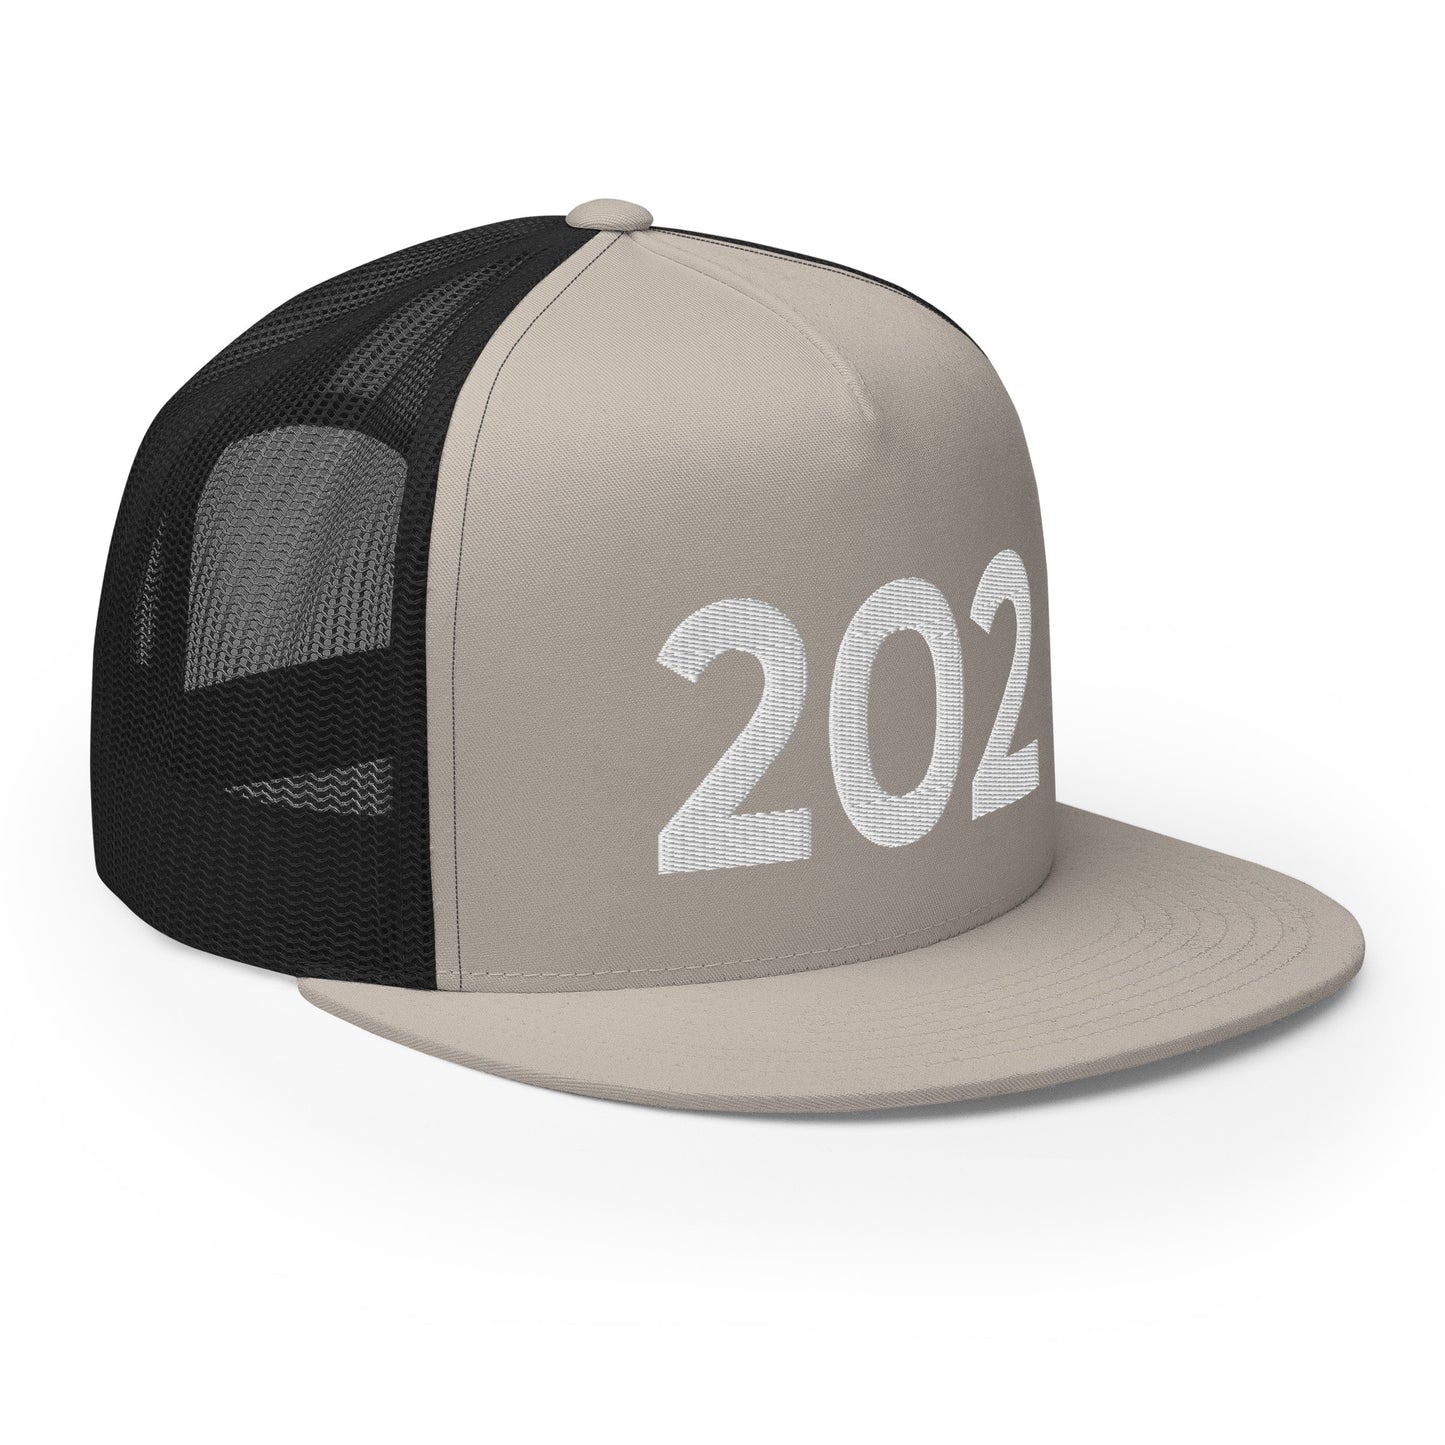 202 DC Trucker Hat